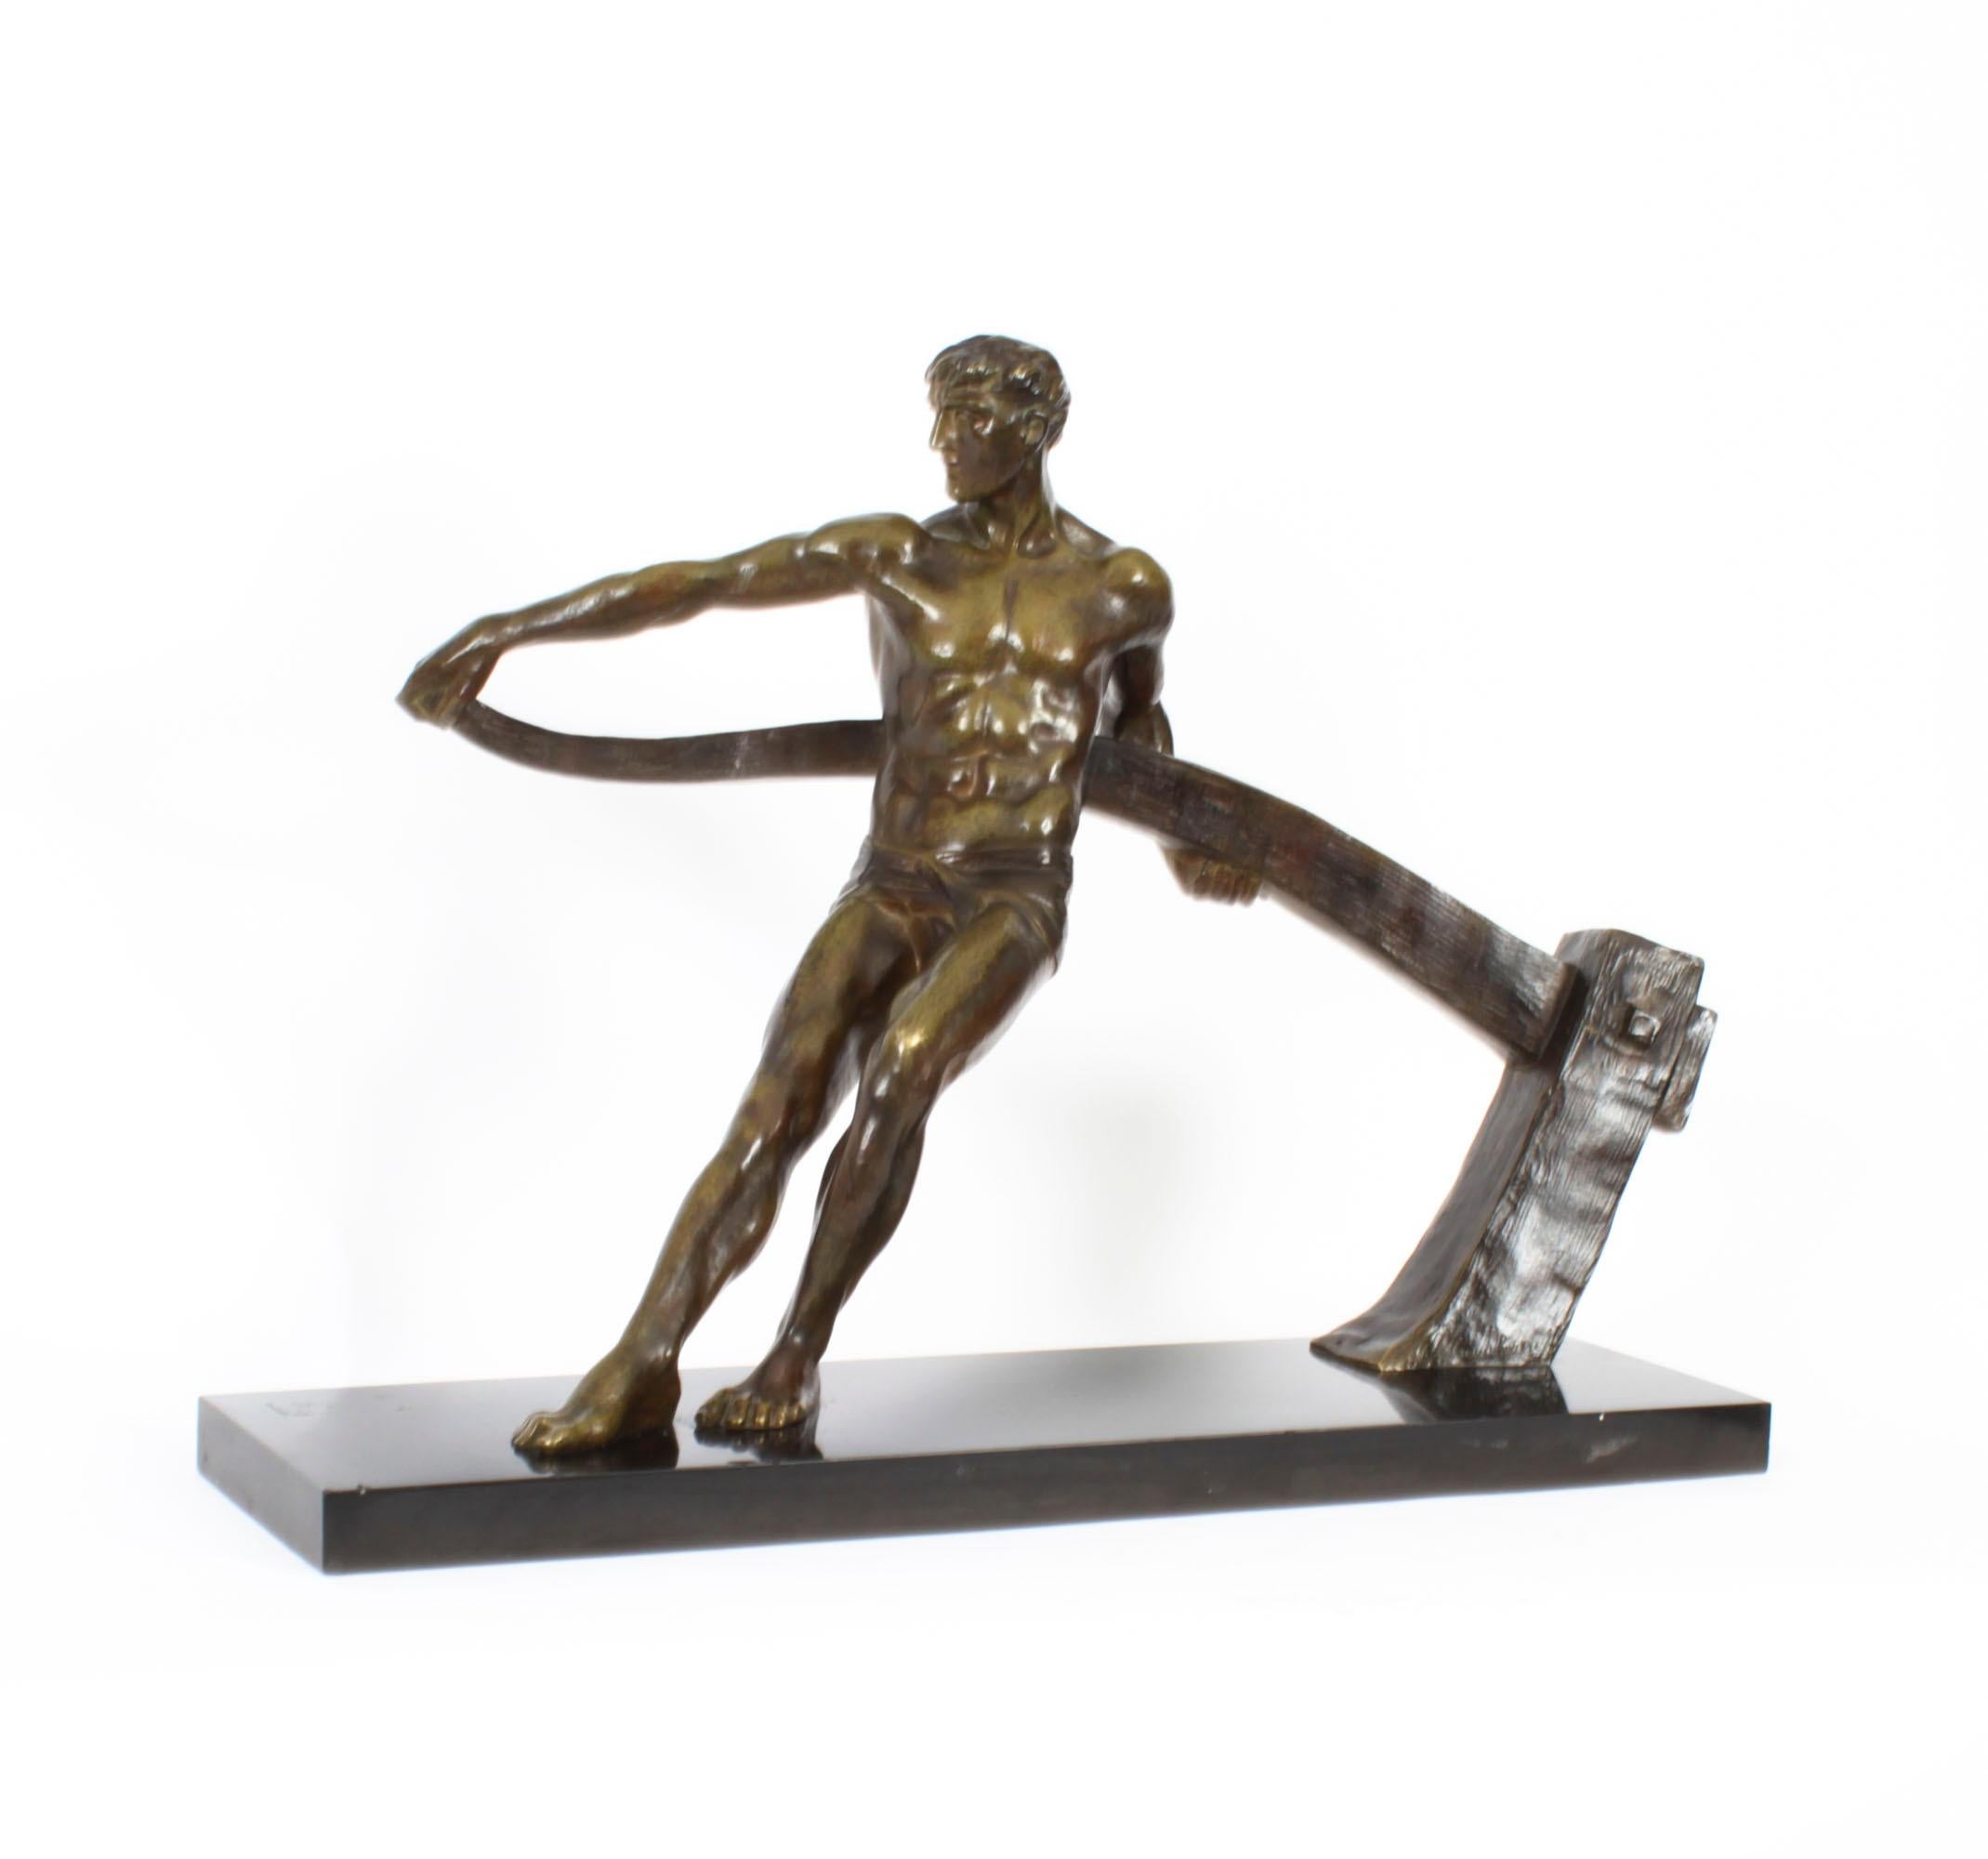 Antique Art Deco Bronze Figure of a Riverman by Maurice Guiraud-Rivière 1920s For Sale 5